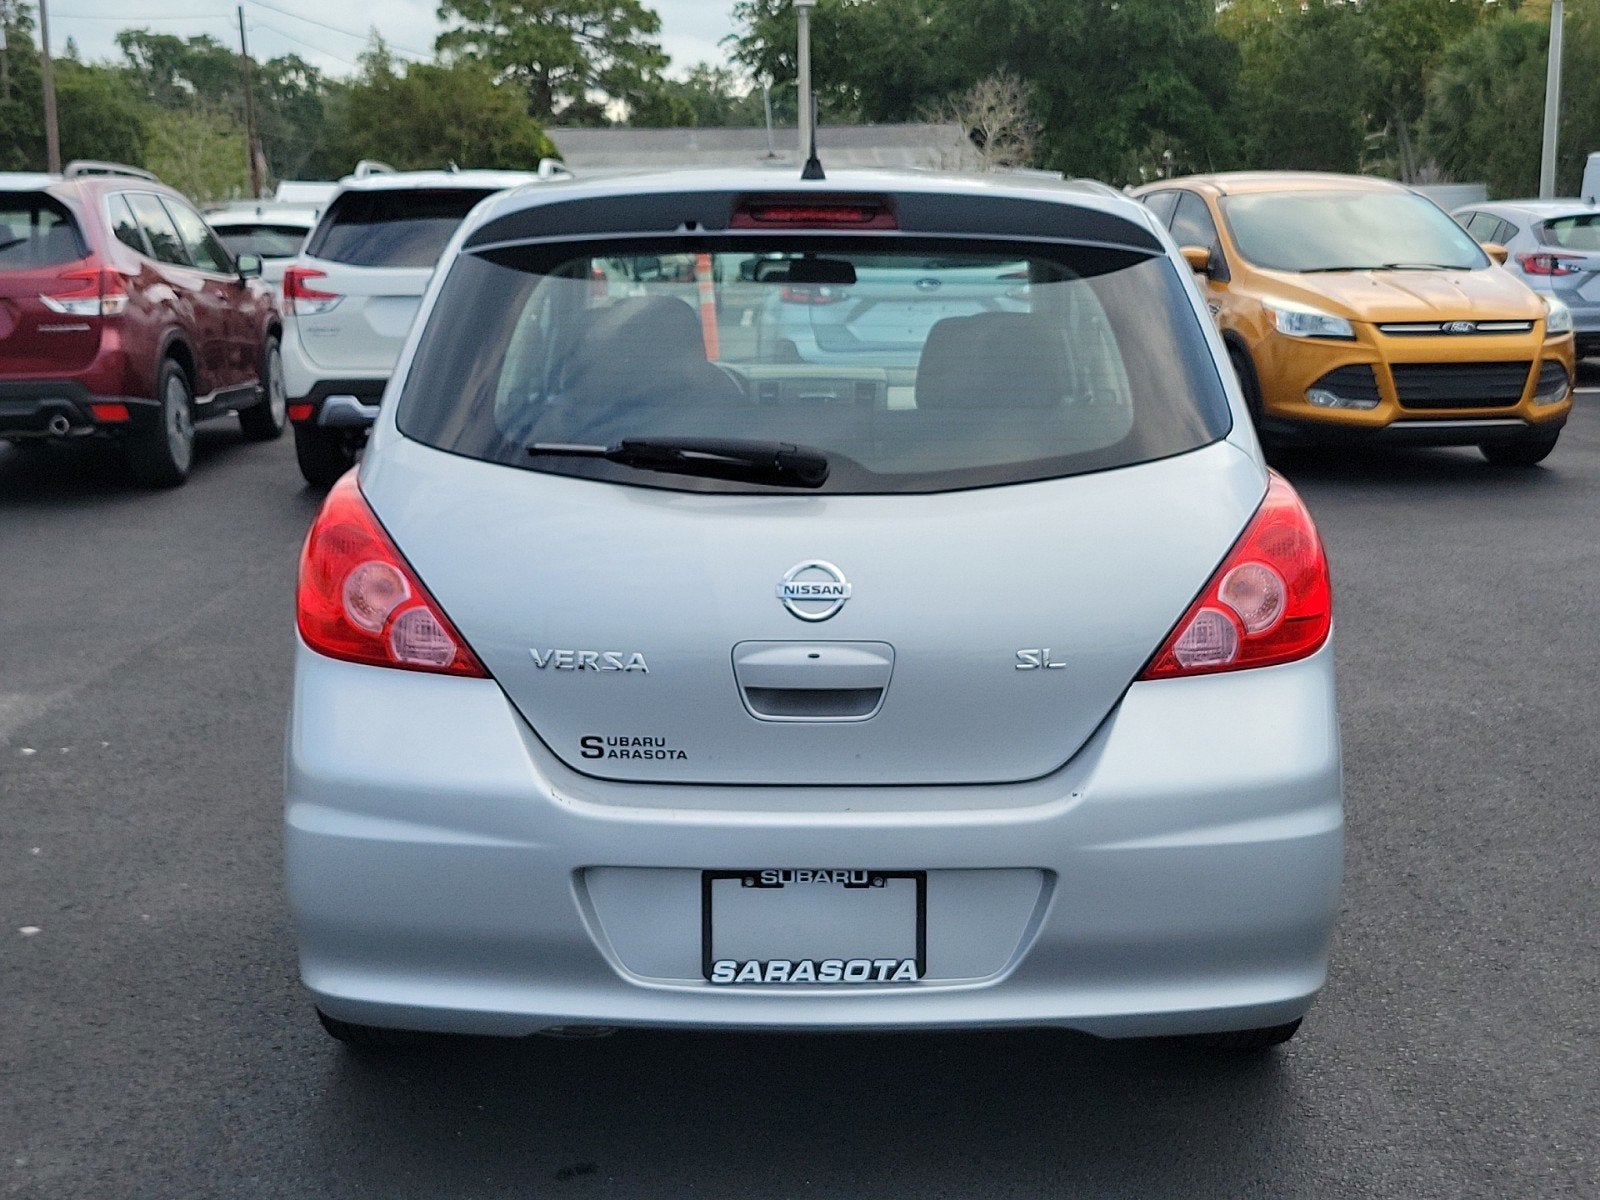 2012 Nissan Versa SL